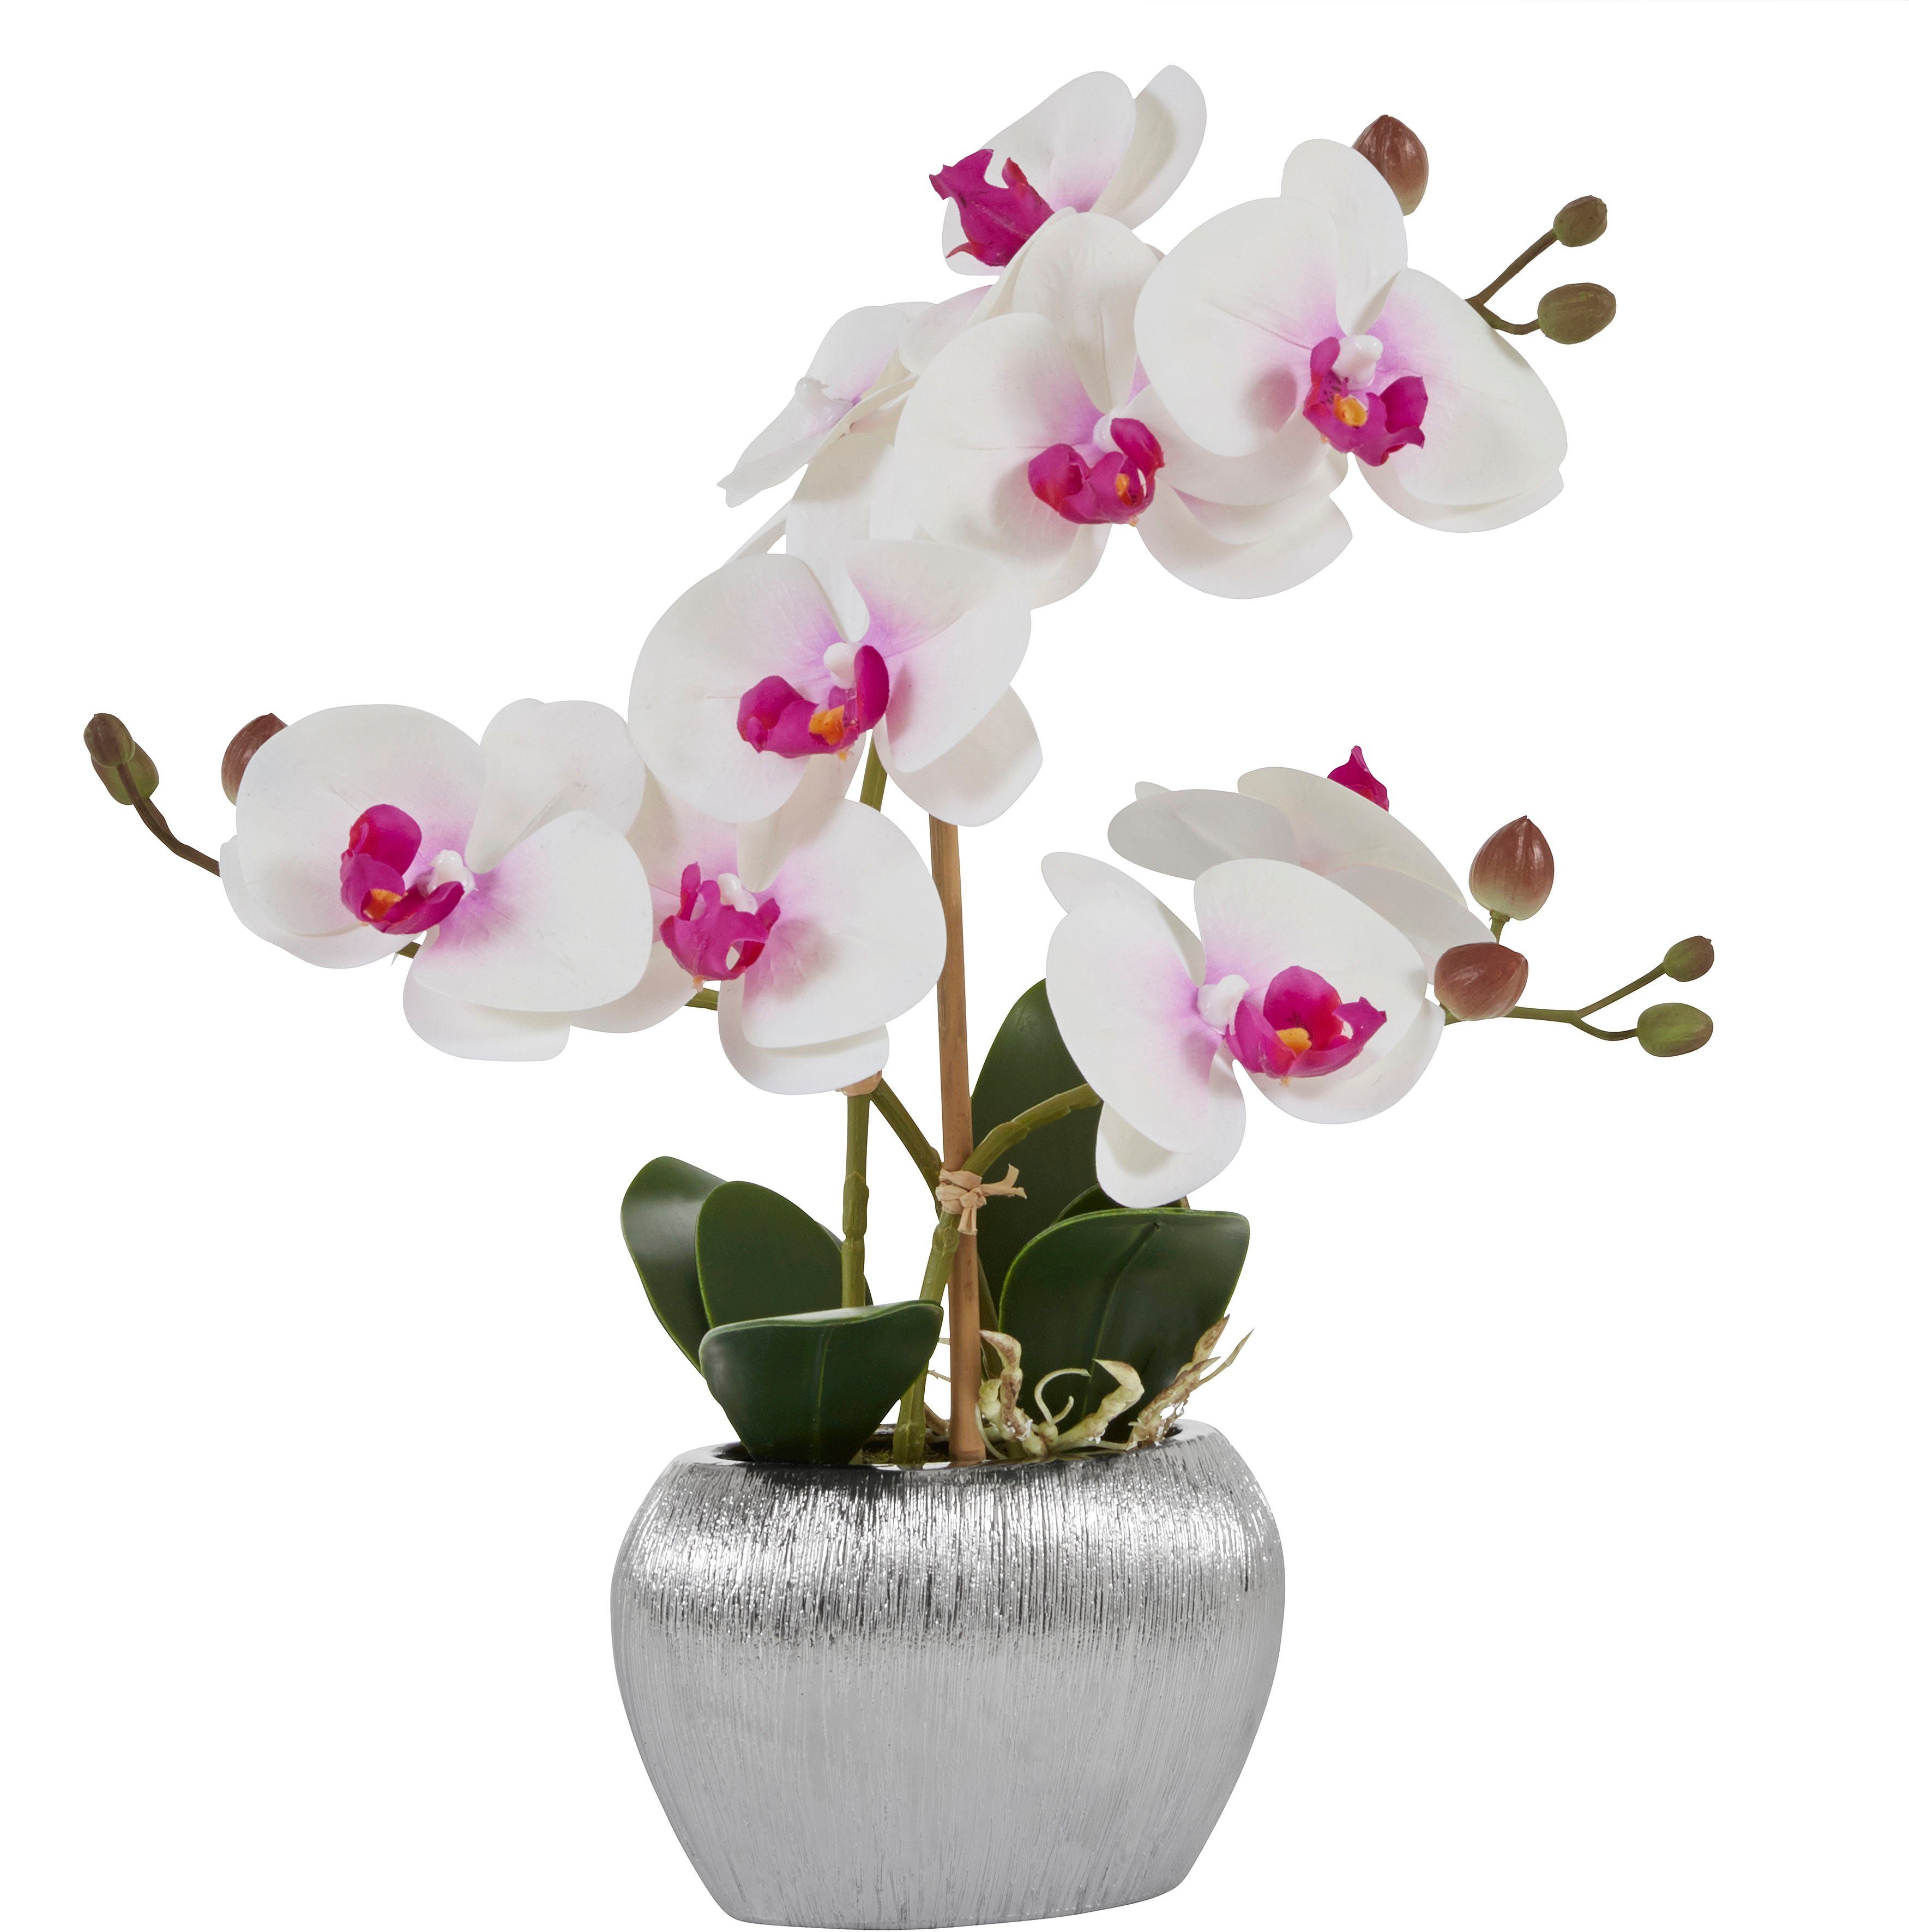 Kunstpflanze Orchidee, Home affaire, Höhe 38 cm, Kunstorchidee, im Topf weiß